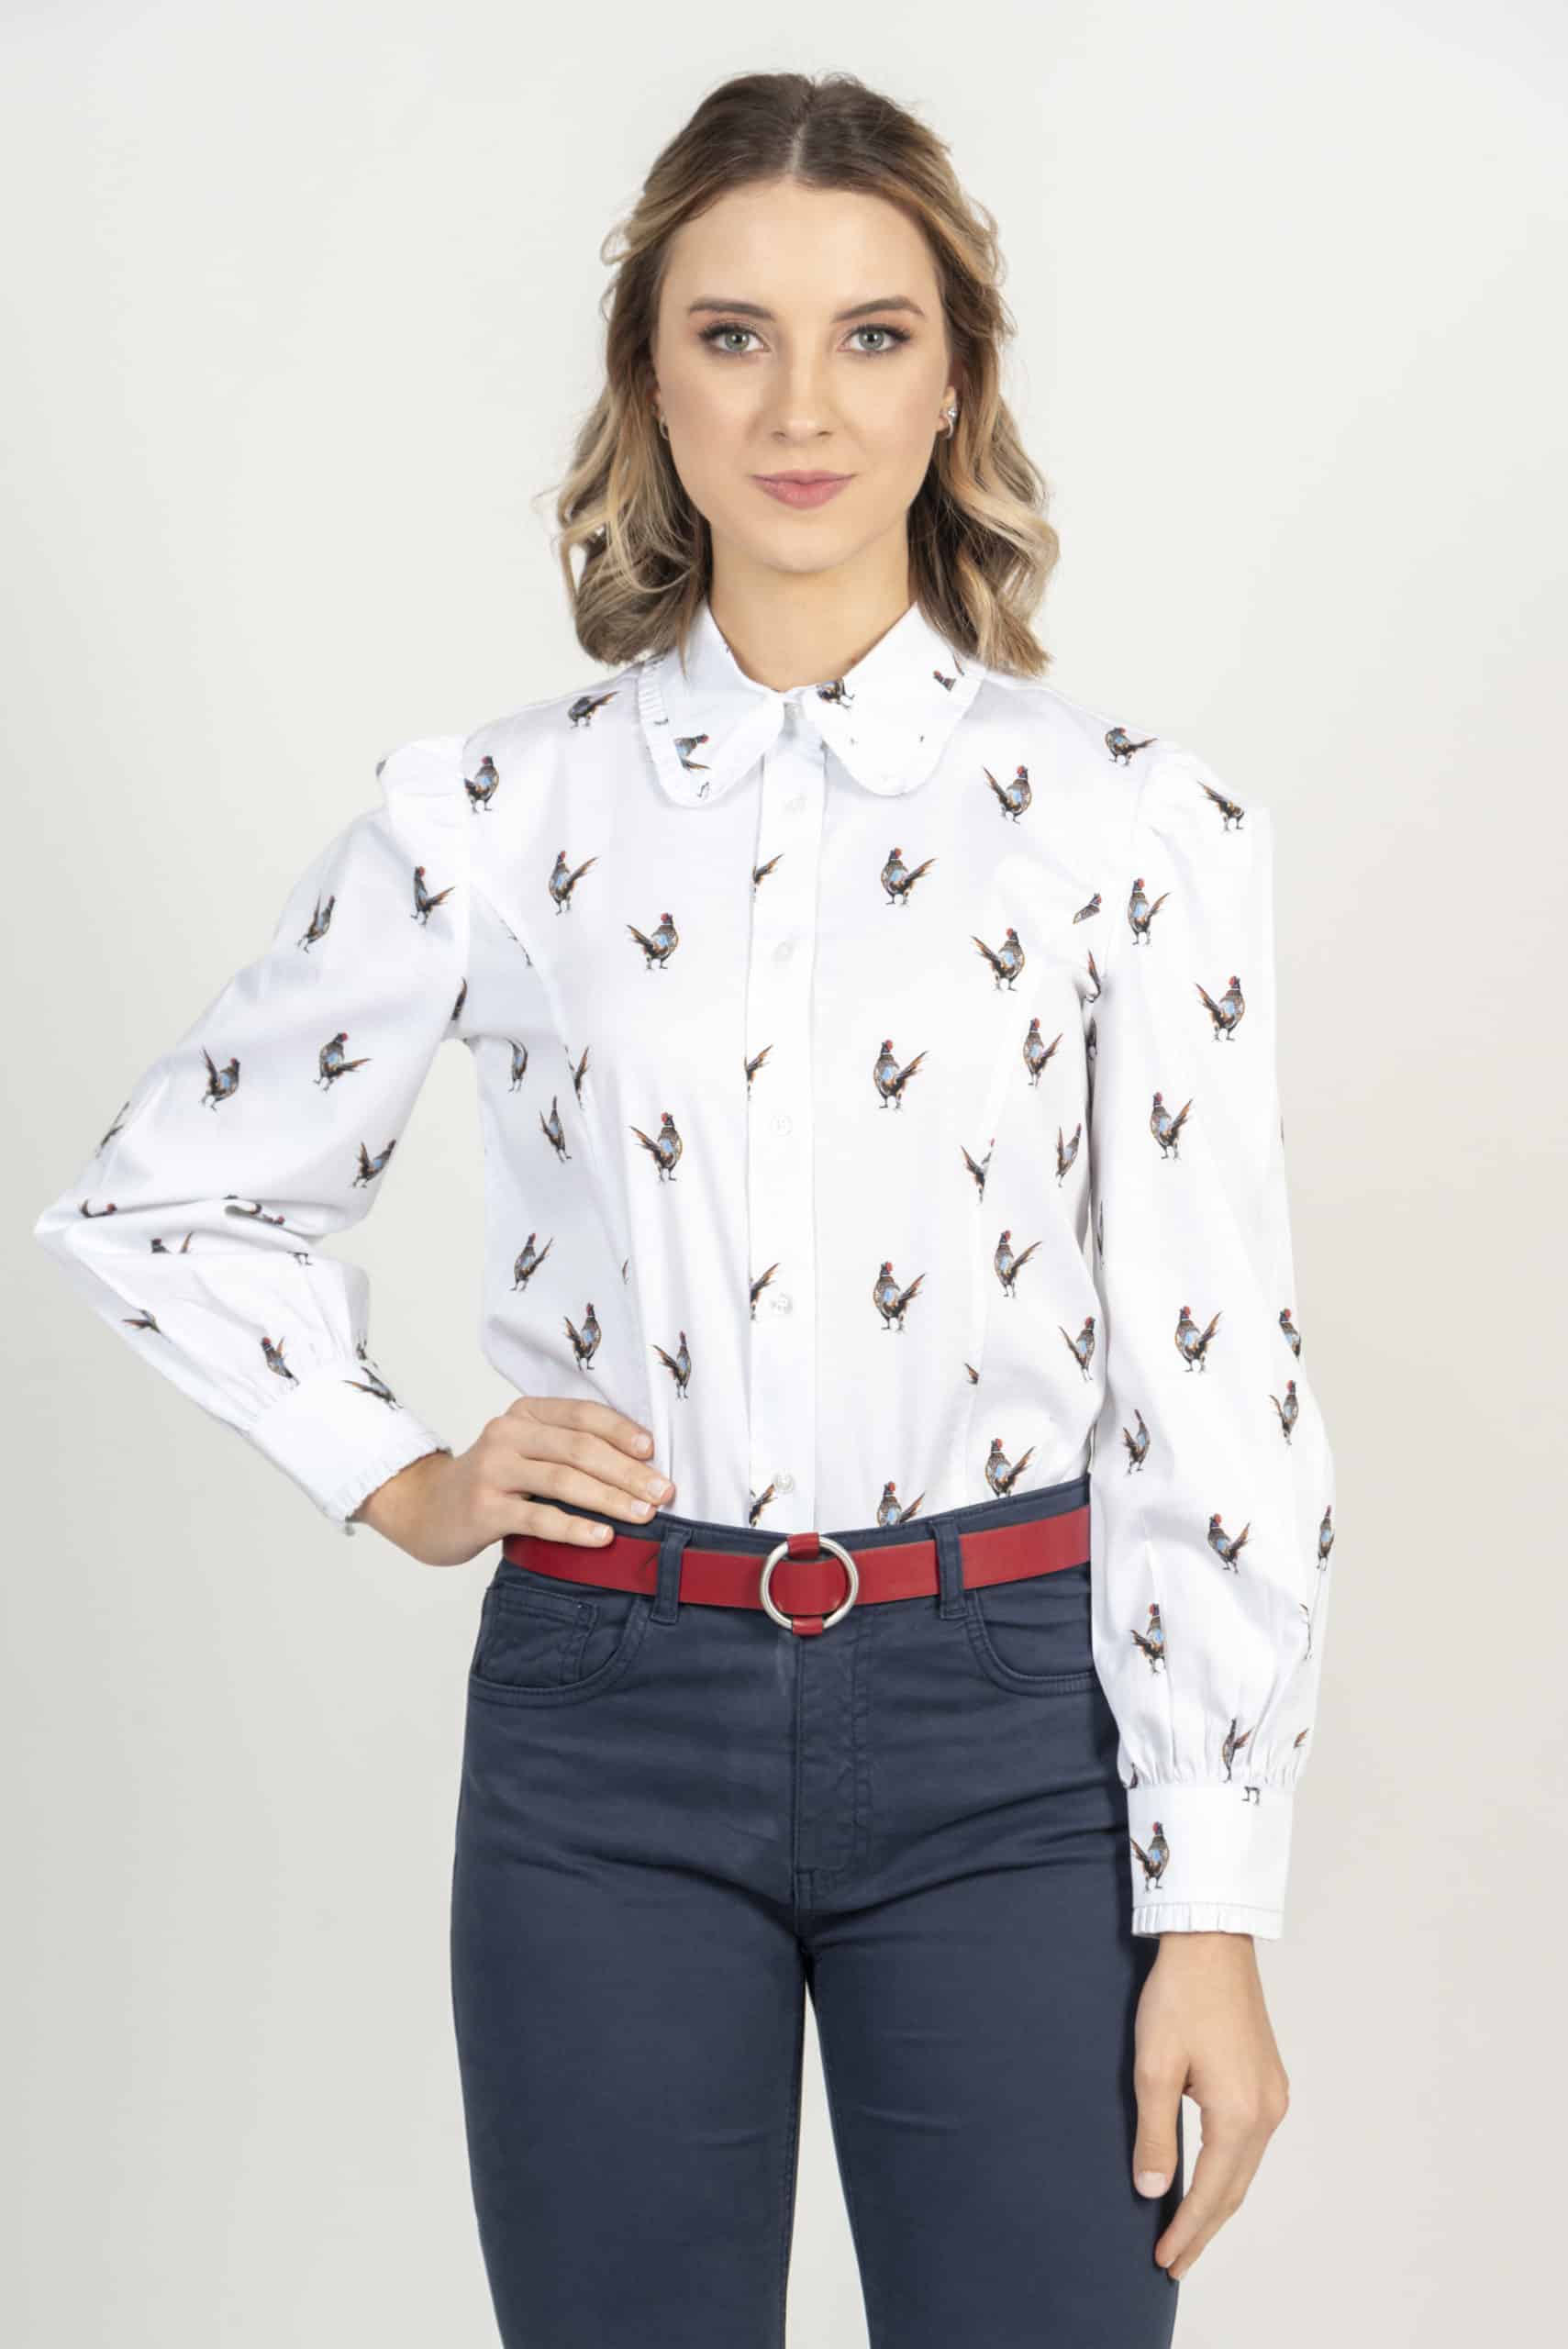 SUE White Pheasants luxury cotton shirt with LYCRA